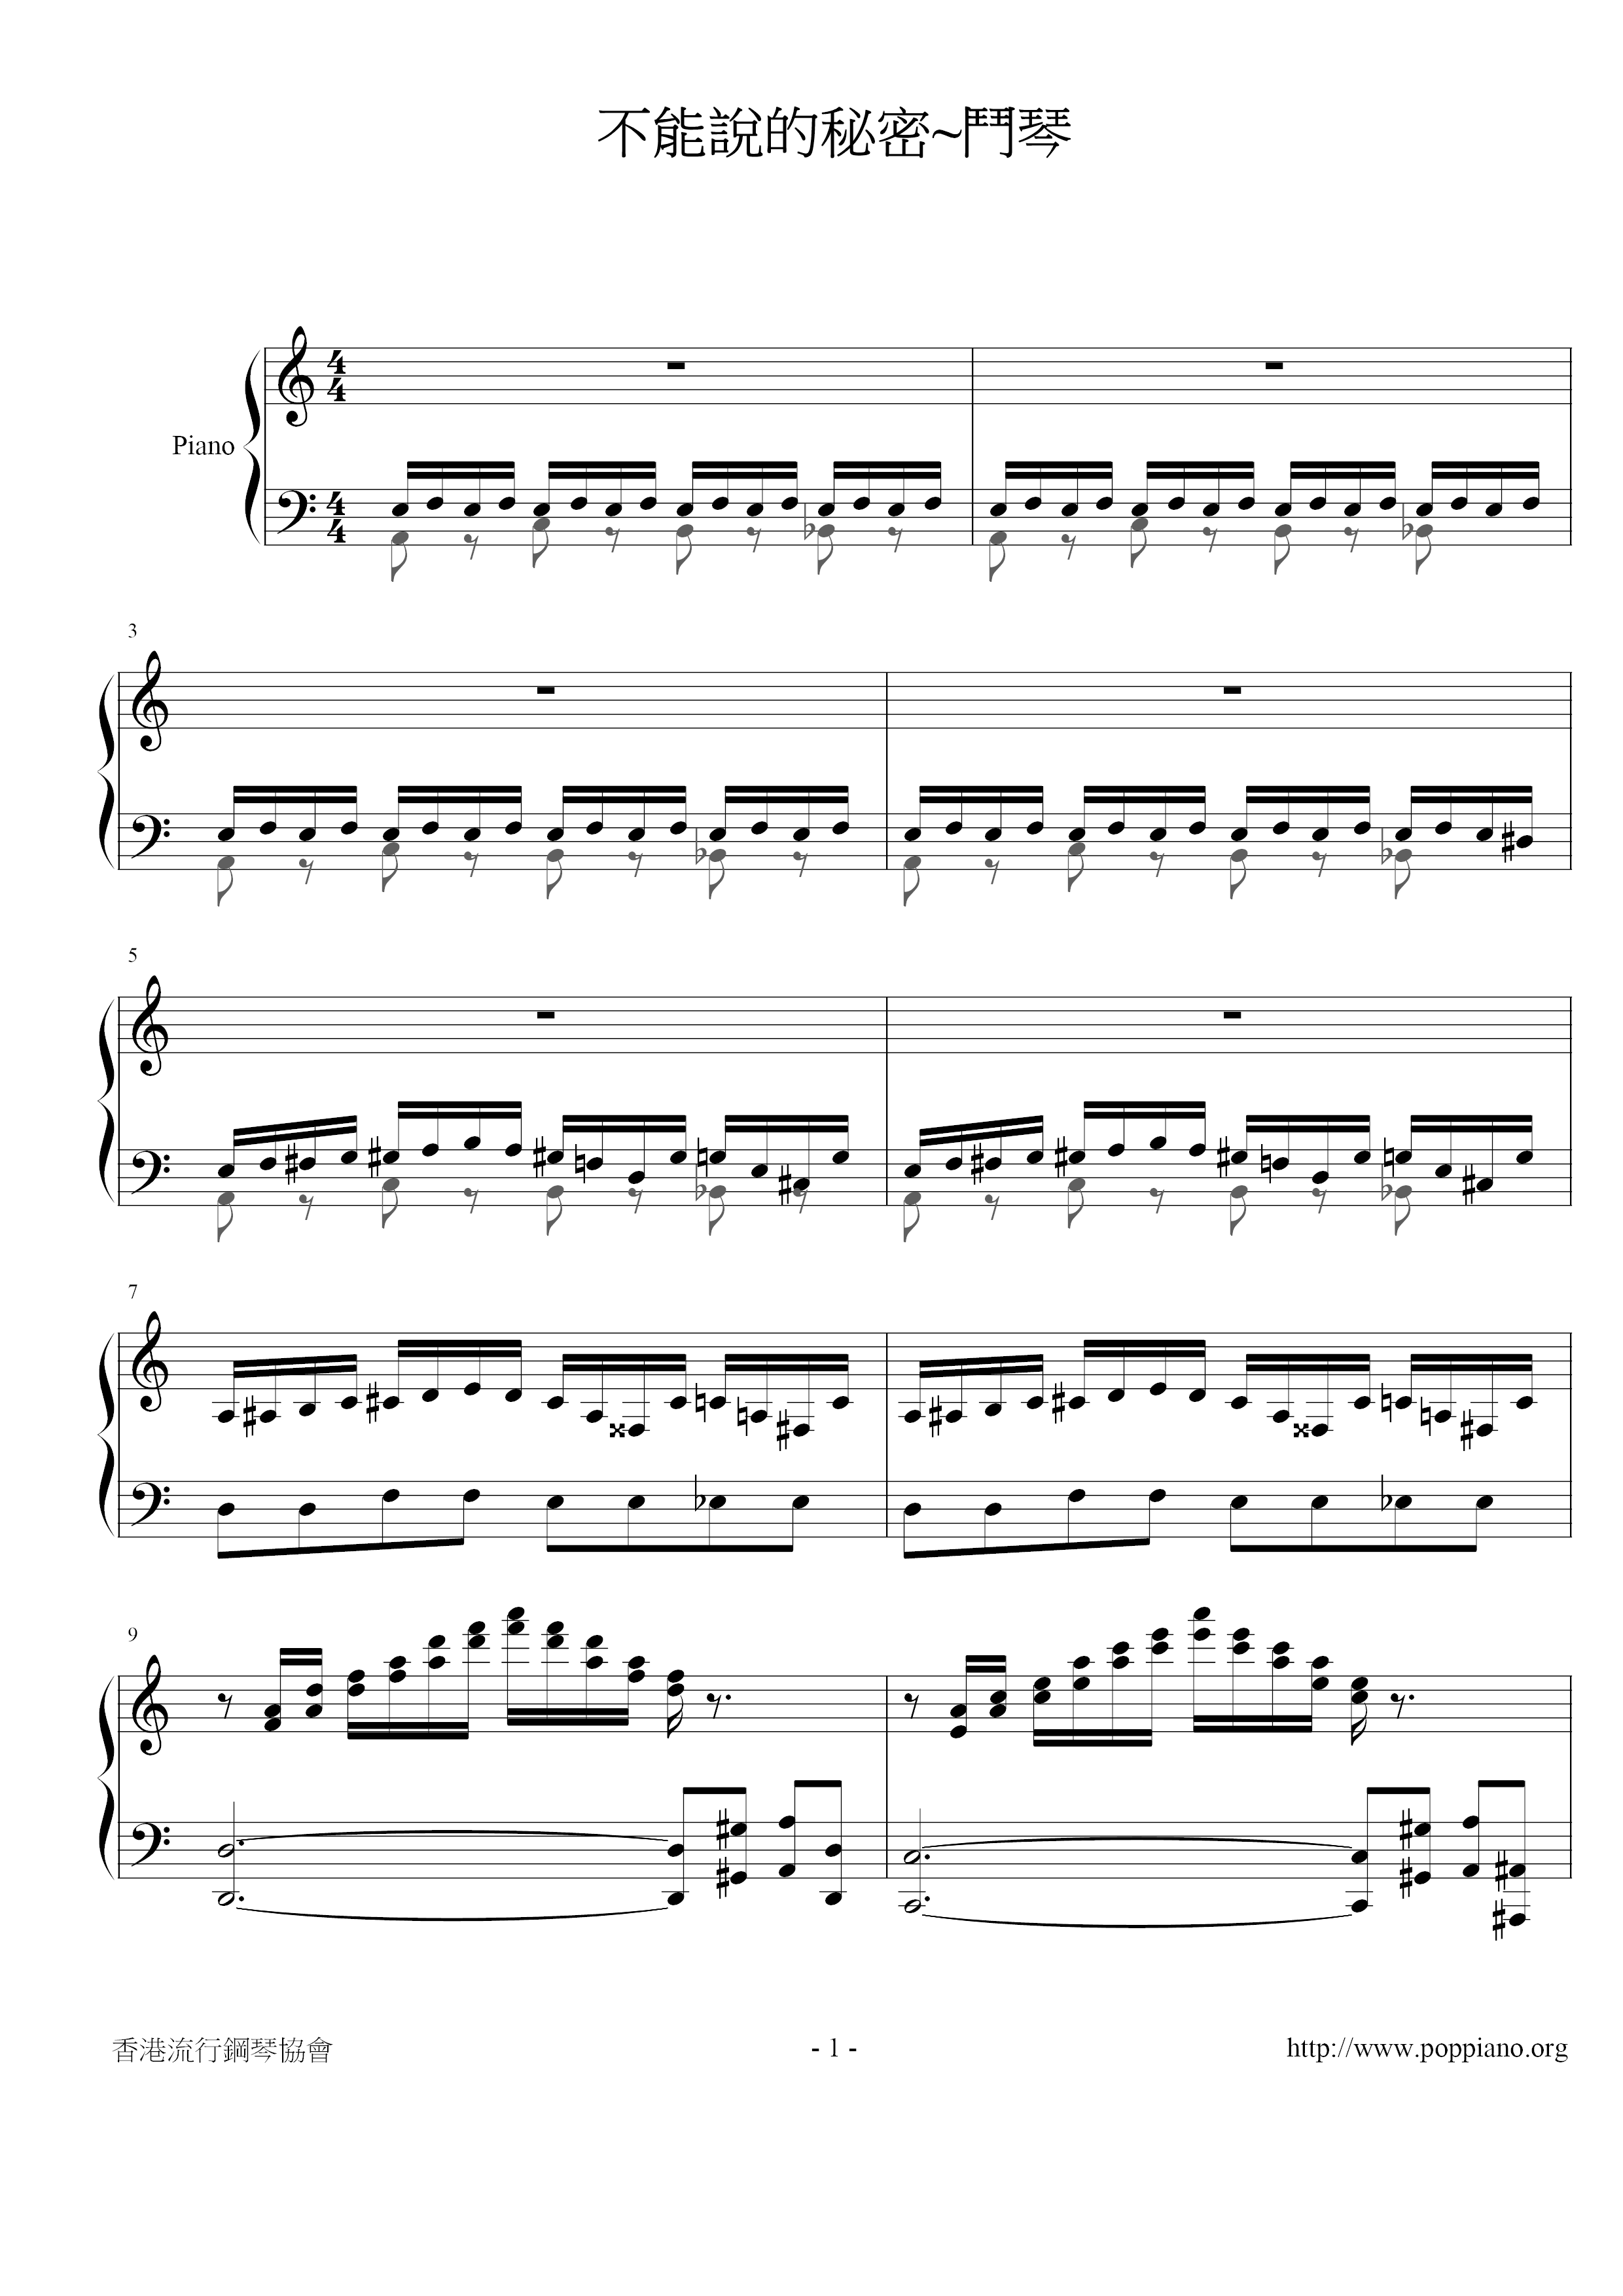 Secret - Piano Battle 3 Score